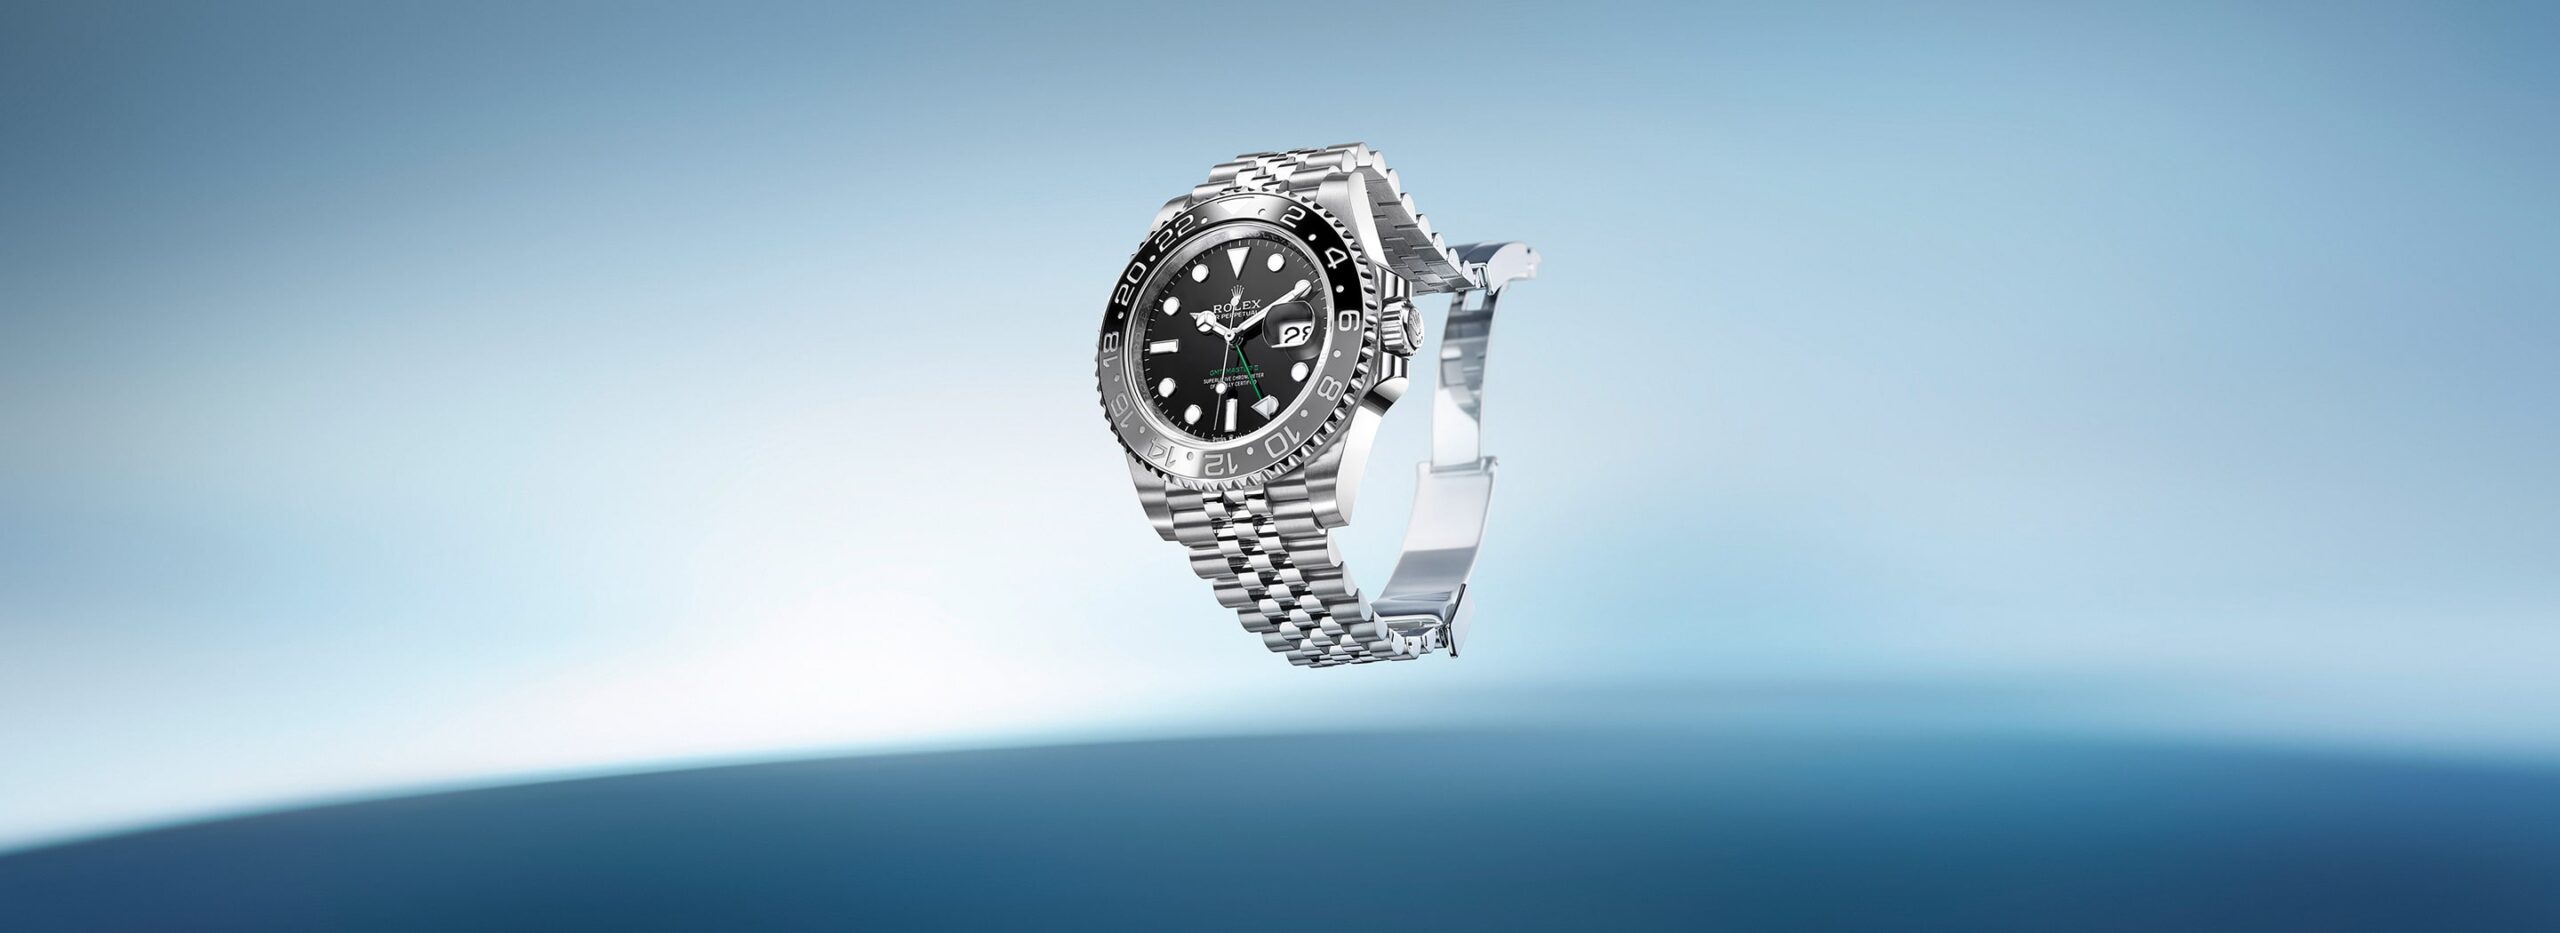 rolex new watches 2024 gmt master ii ambiance M126710GRNR 0004 2401jva 001 rvb min